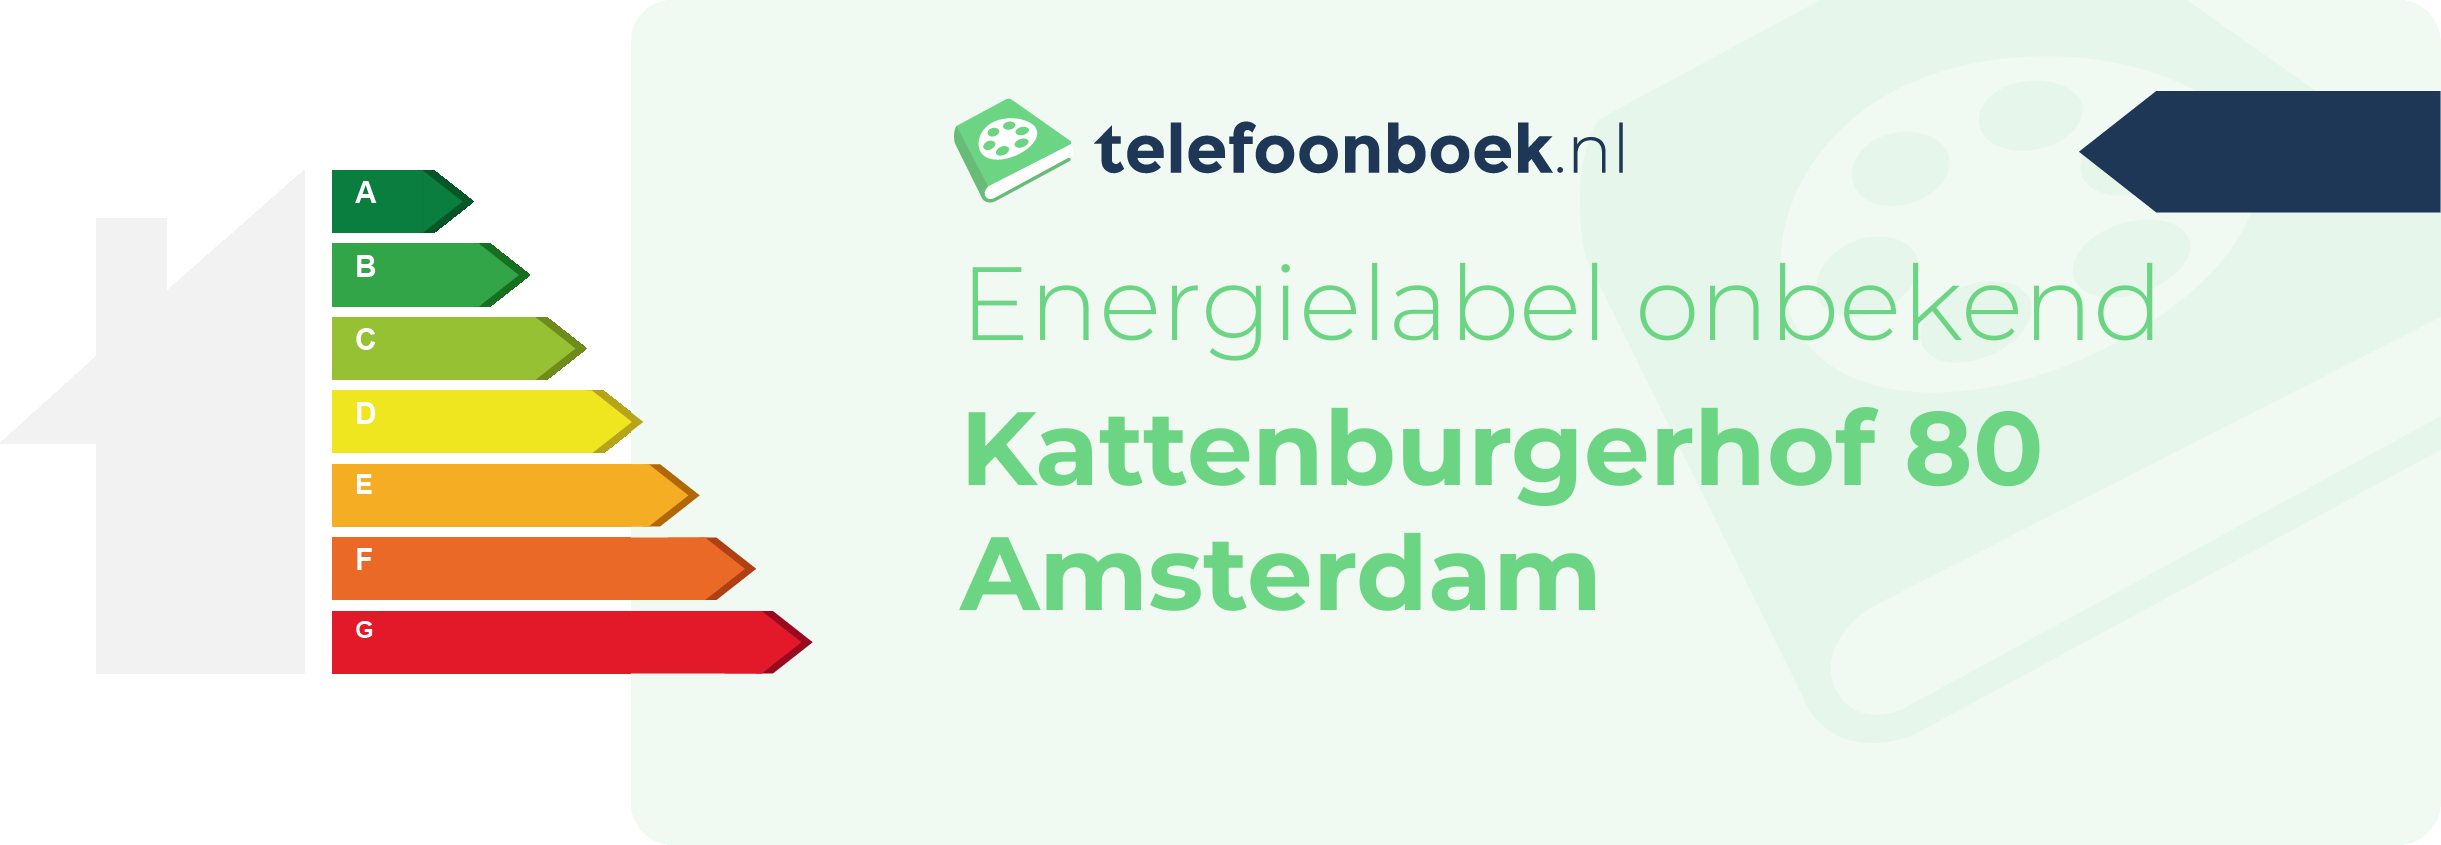 Energielabel Kattenburgerhof 80 Amsterdam